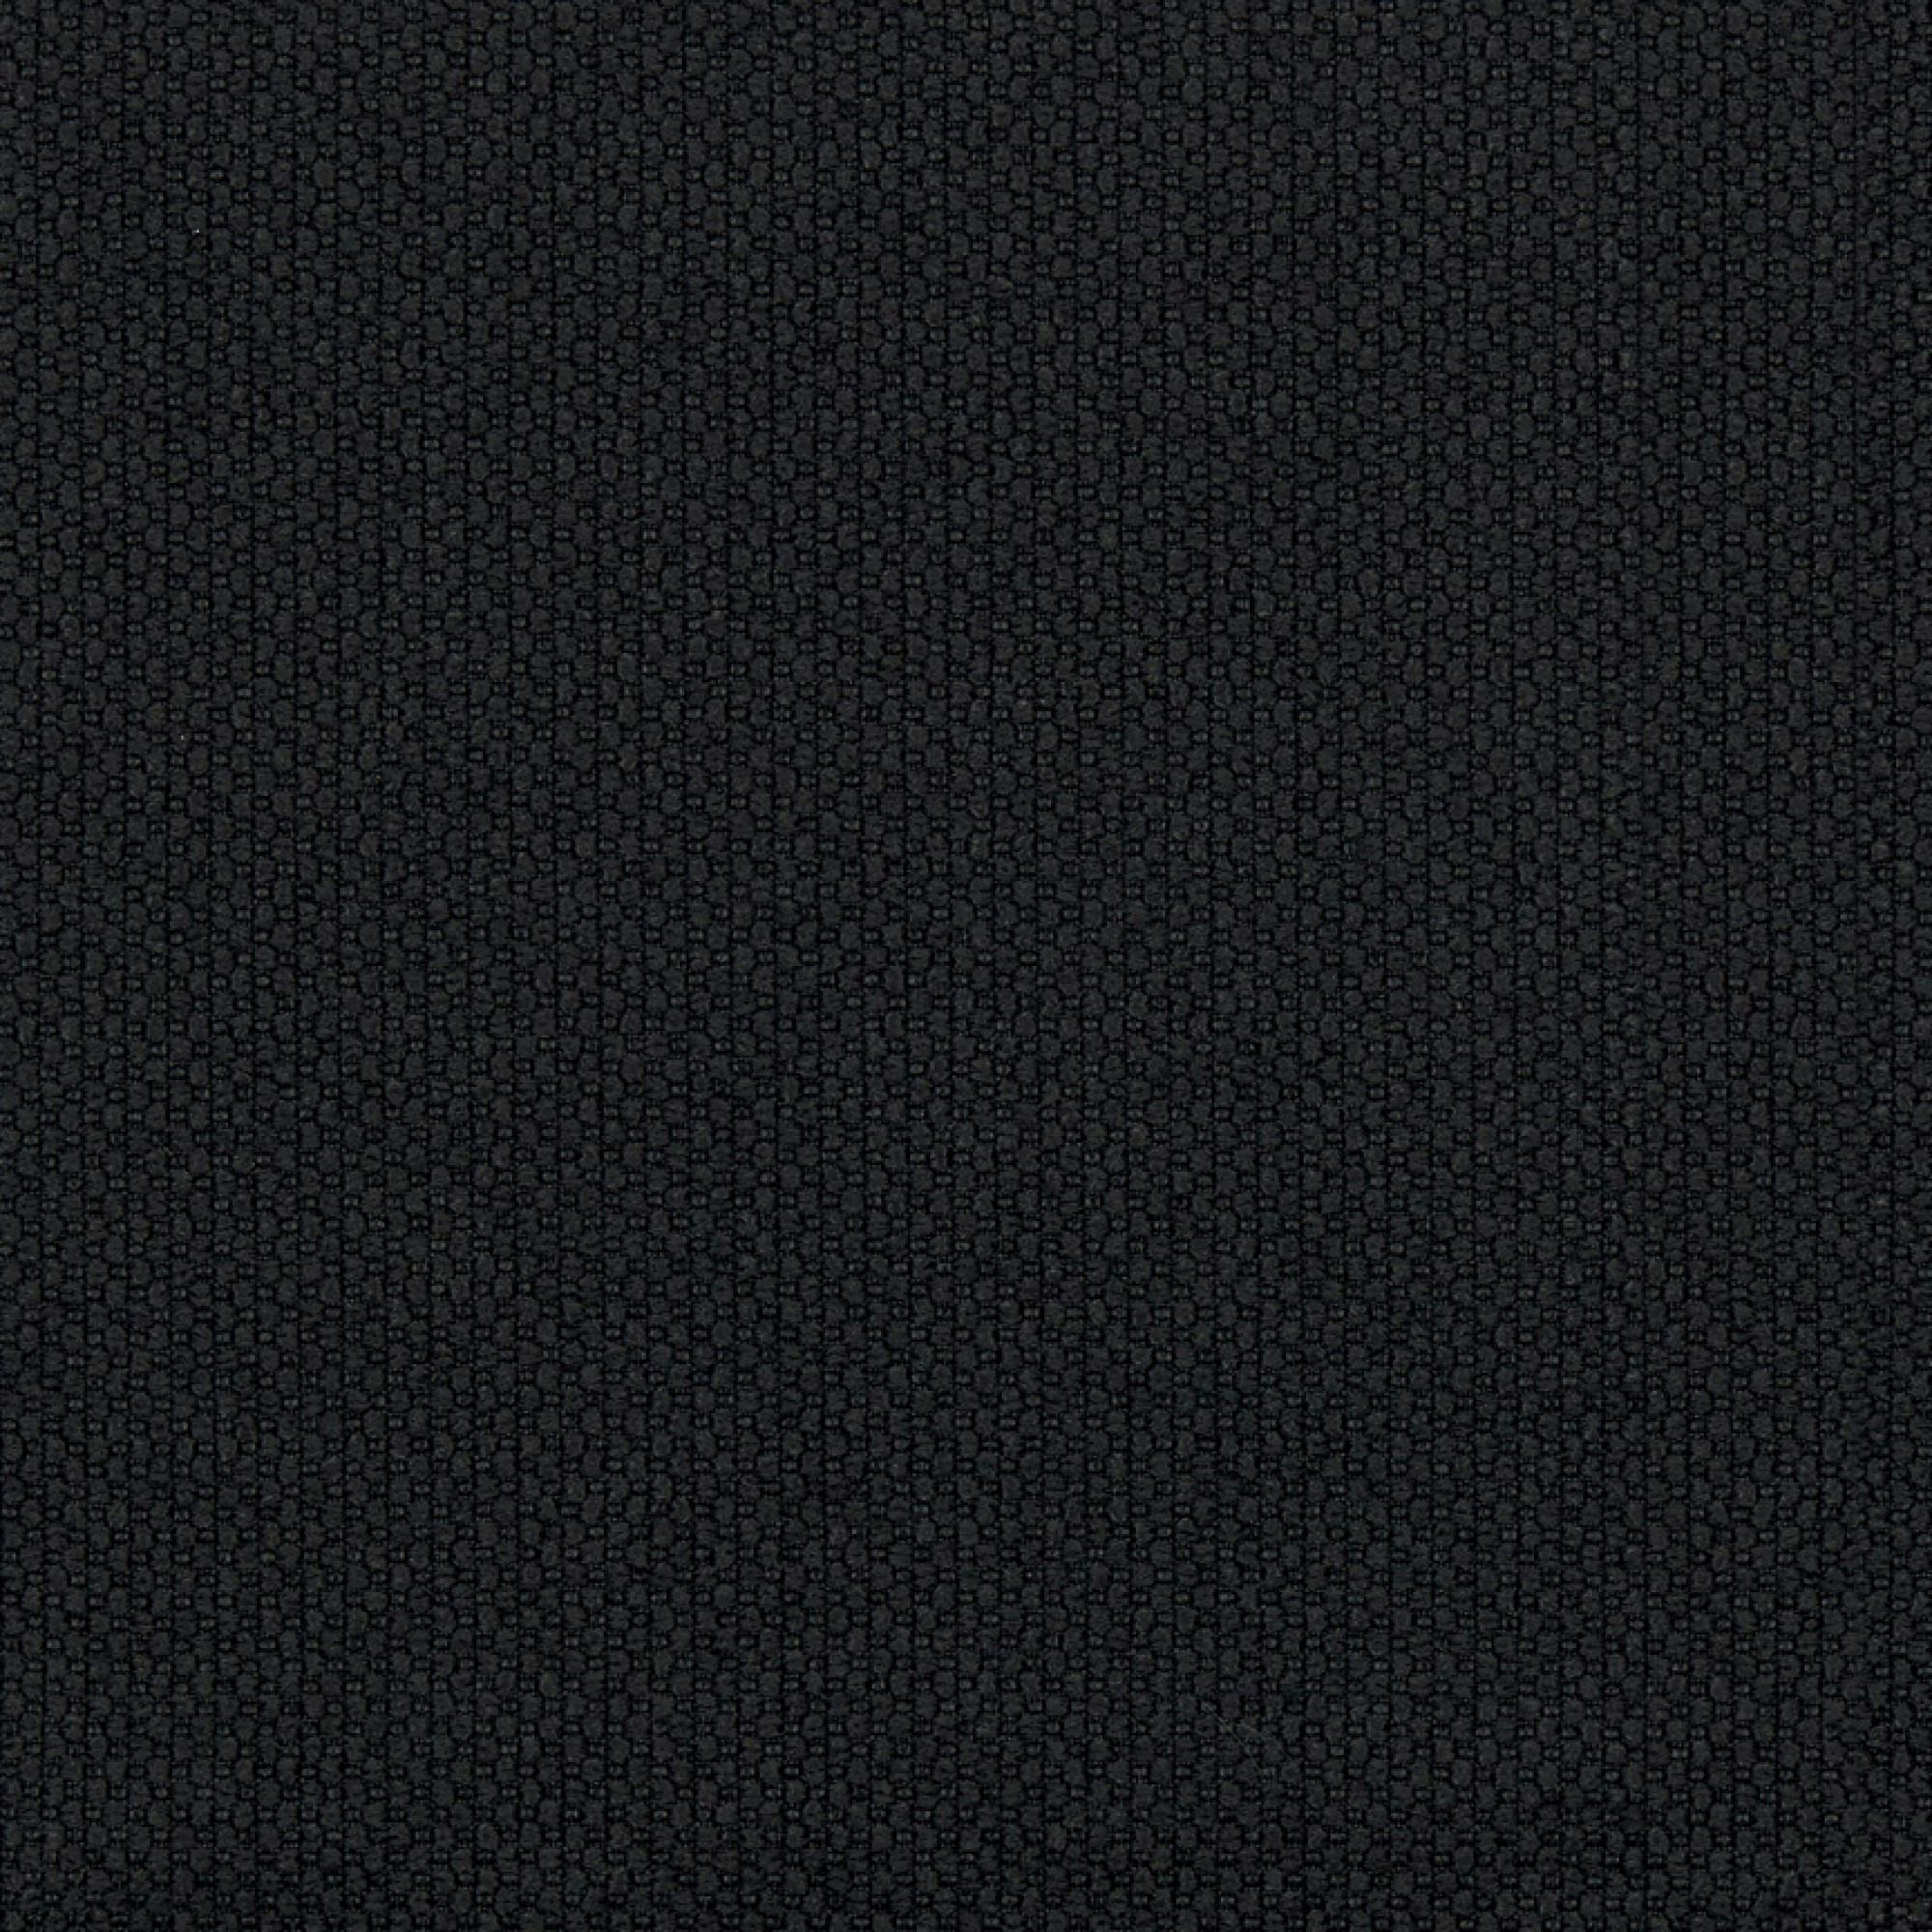 Fabric sample Merit 0004 black